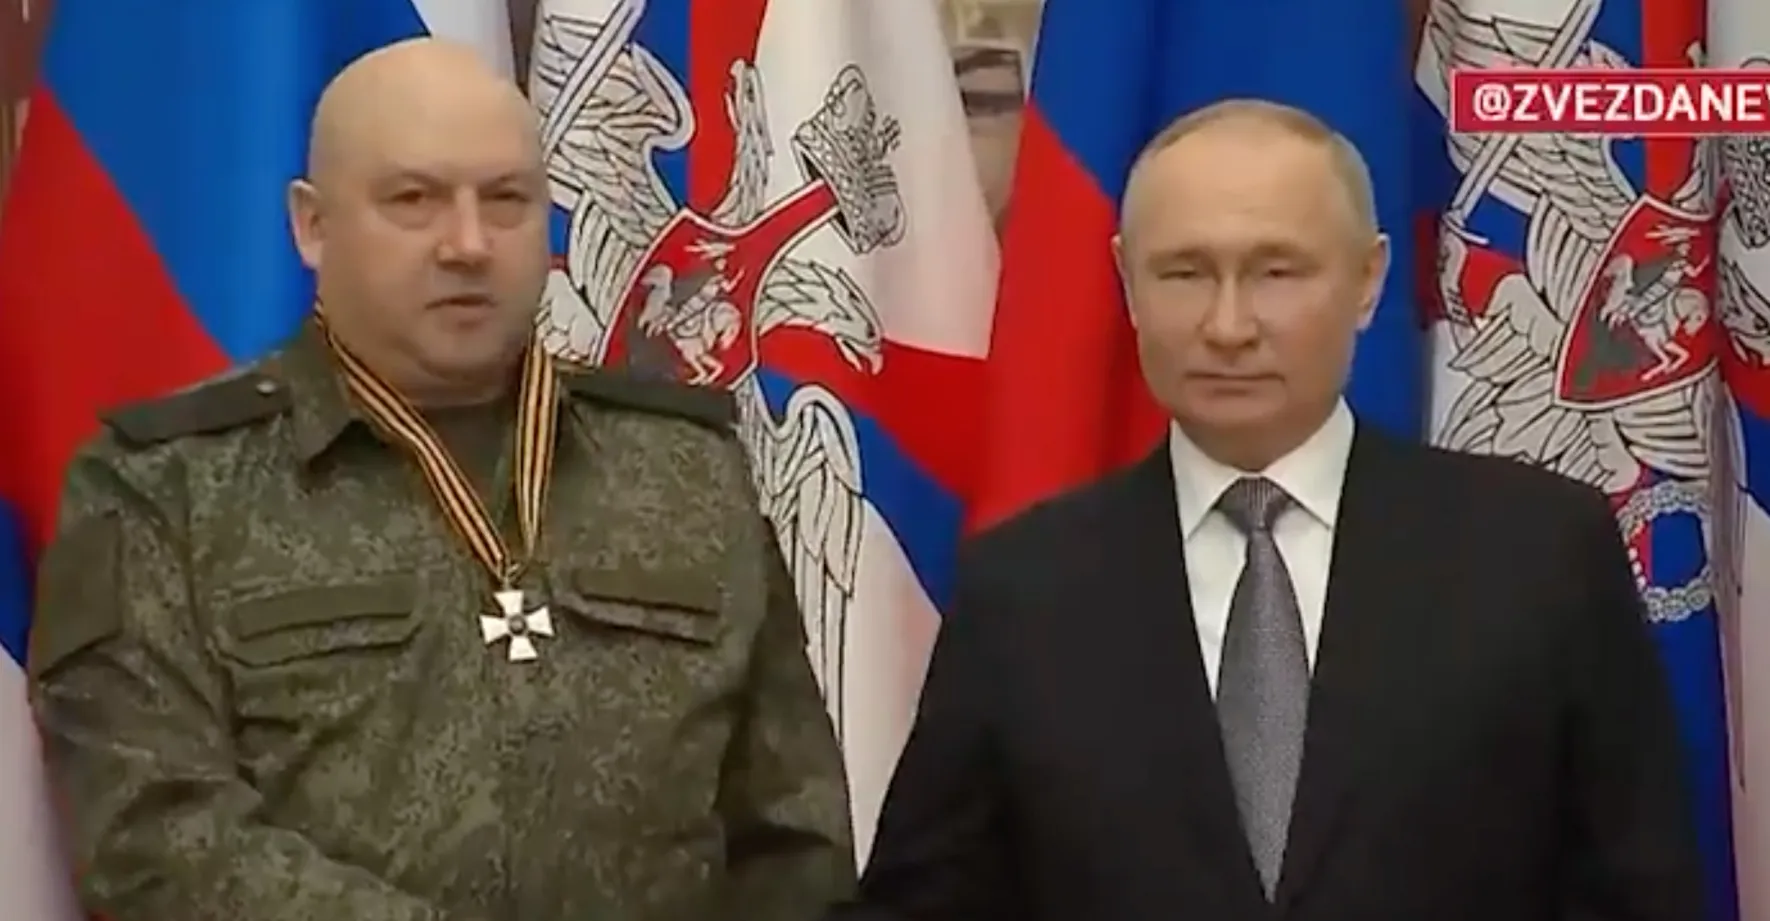 VIDEO: Putin vyznamenal velitele jednotek na Ukrajině Surovikina